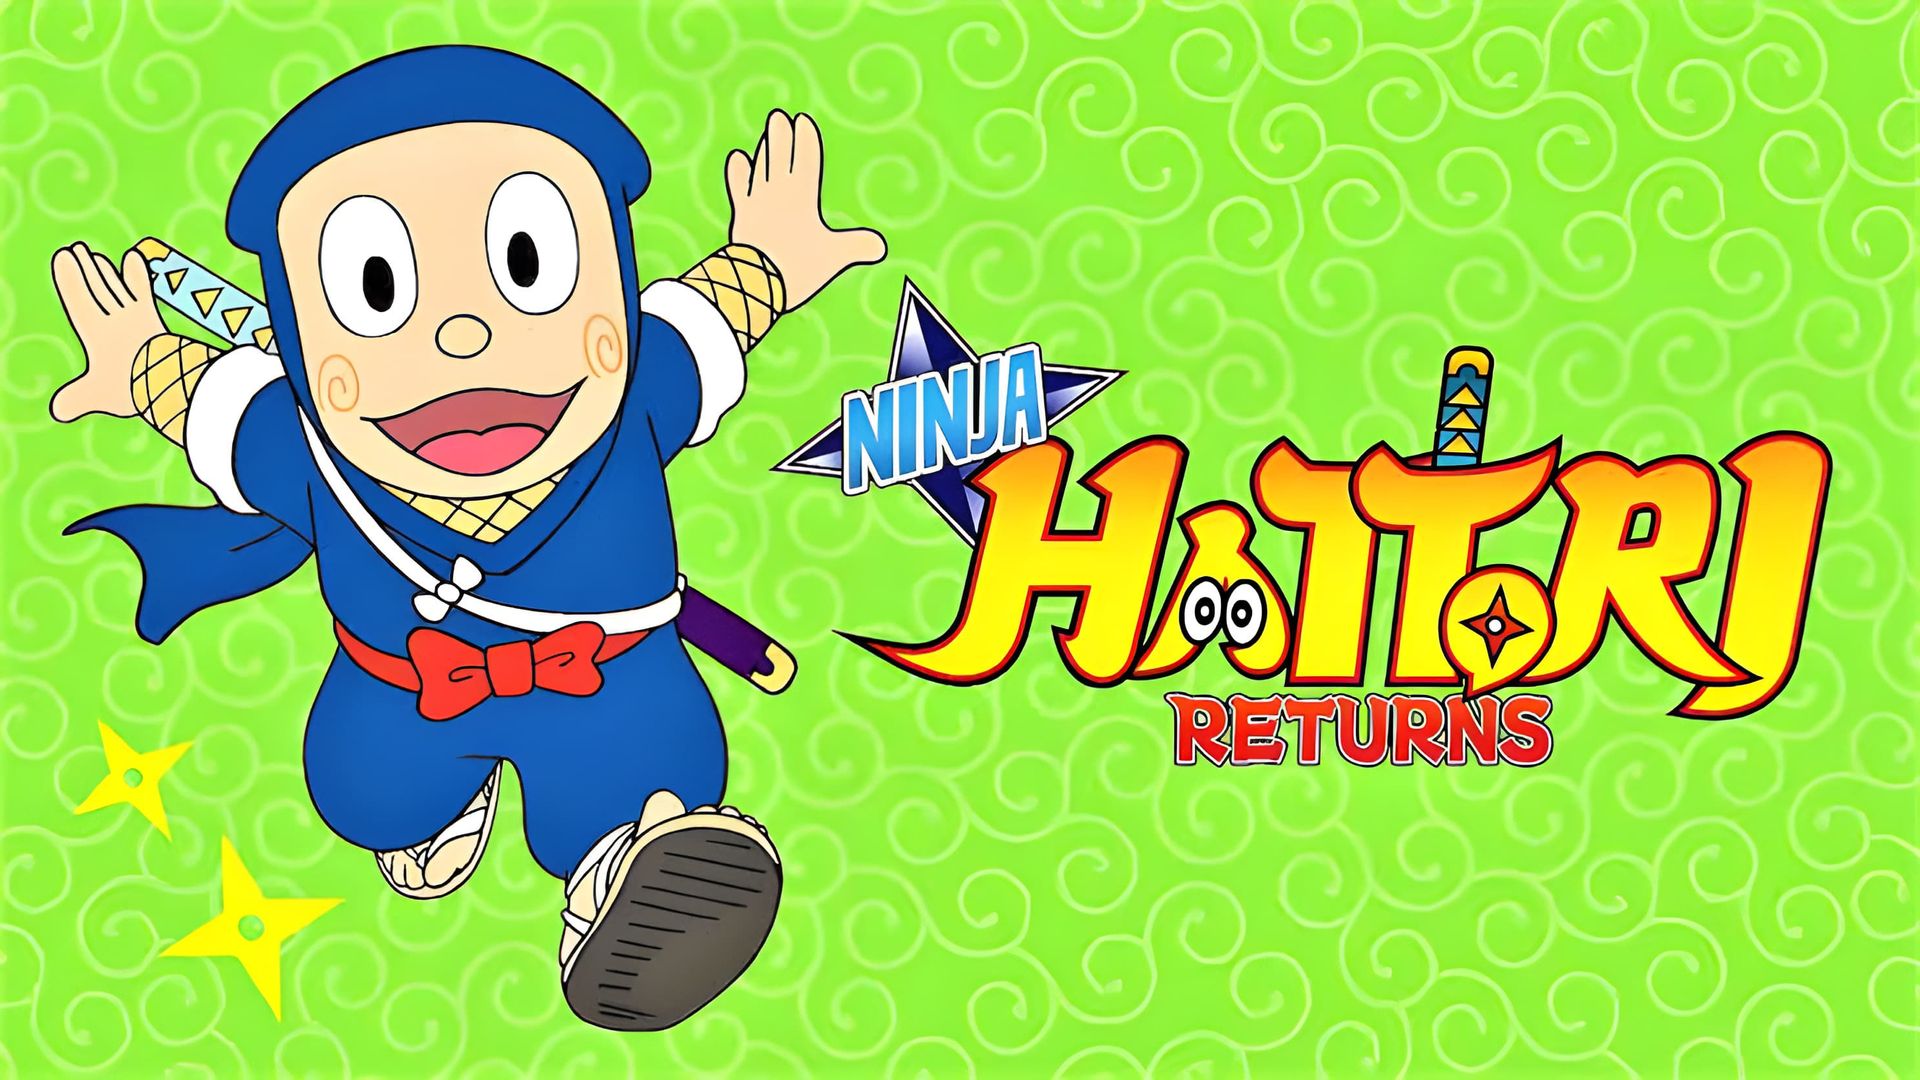 Ninja Hattori Returns background